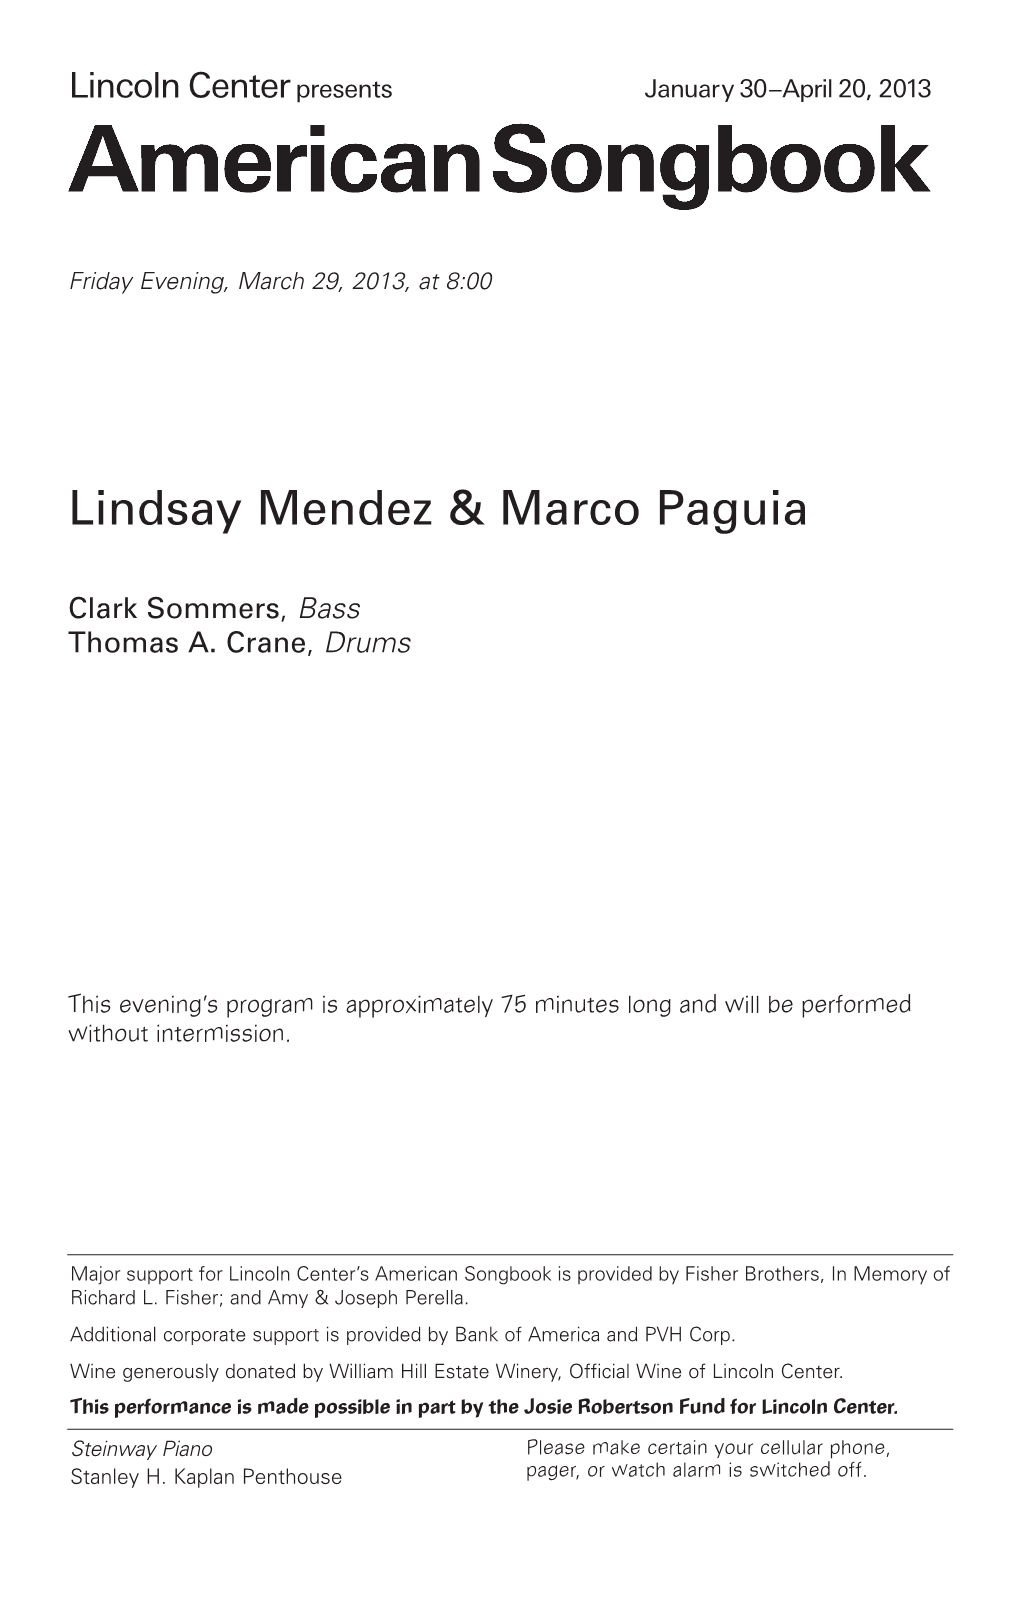 Lindsay Mendez & Marco Paguia